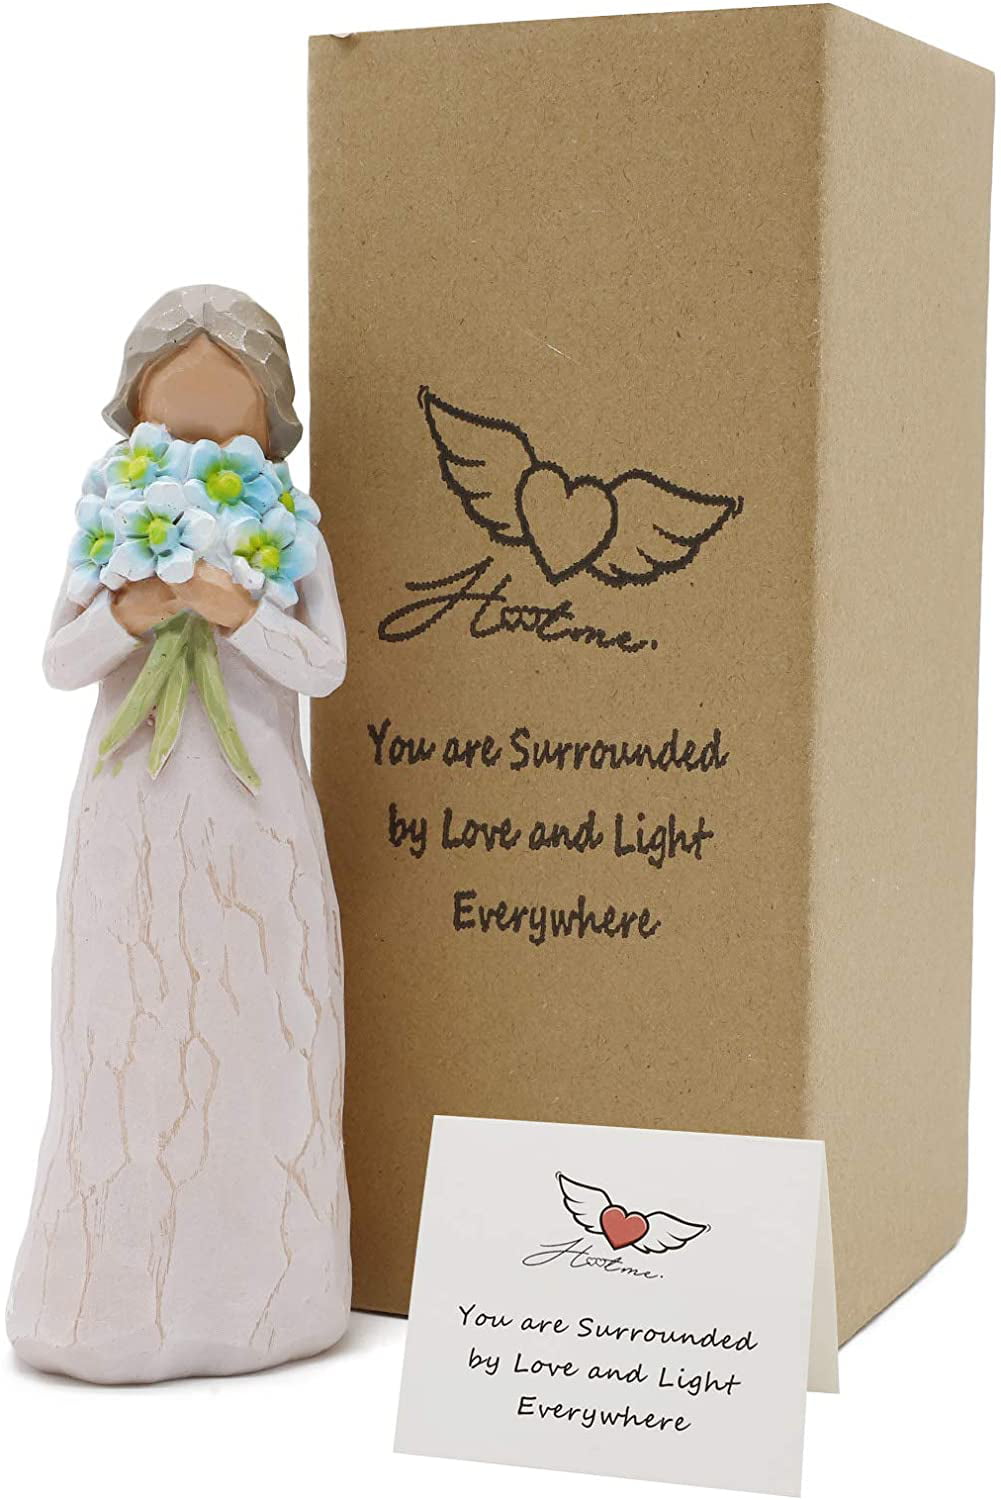 KEEPSAKE WALLET CARD A GUARDIAN ANGEL BY YOUR SIDE Sentimental Comfort Prayer 